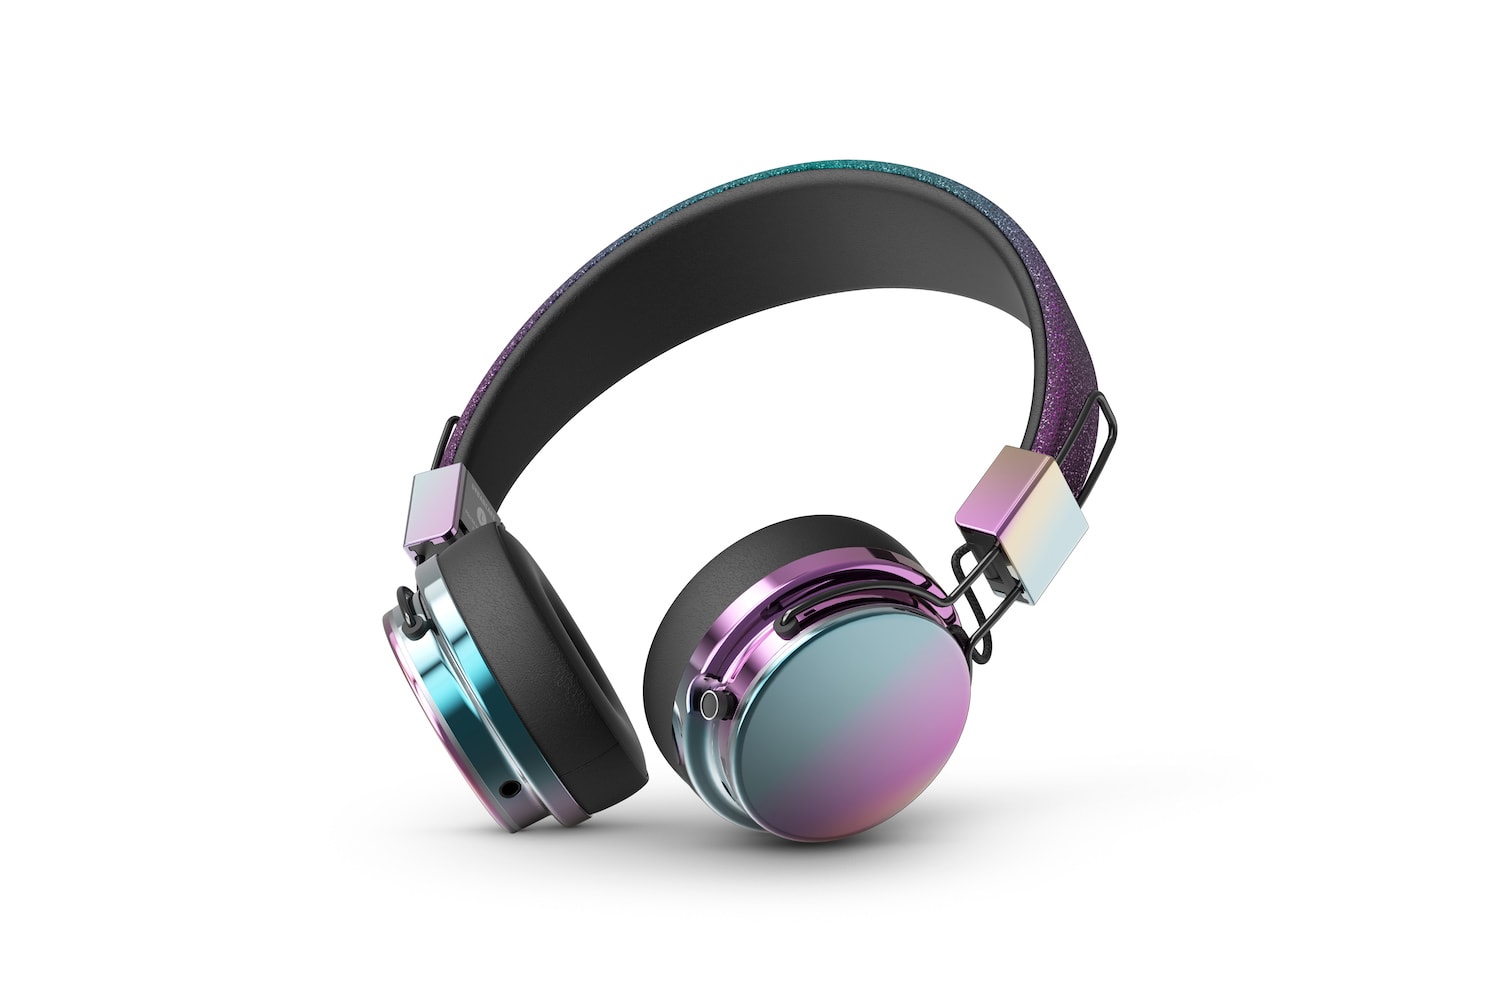 Tove Lo x Urbanears Headphone Collaboration Music Launch Earphones 